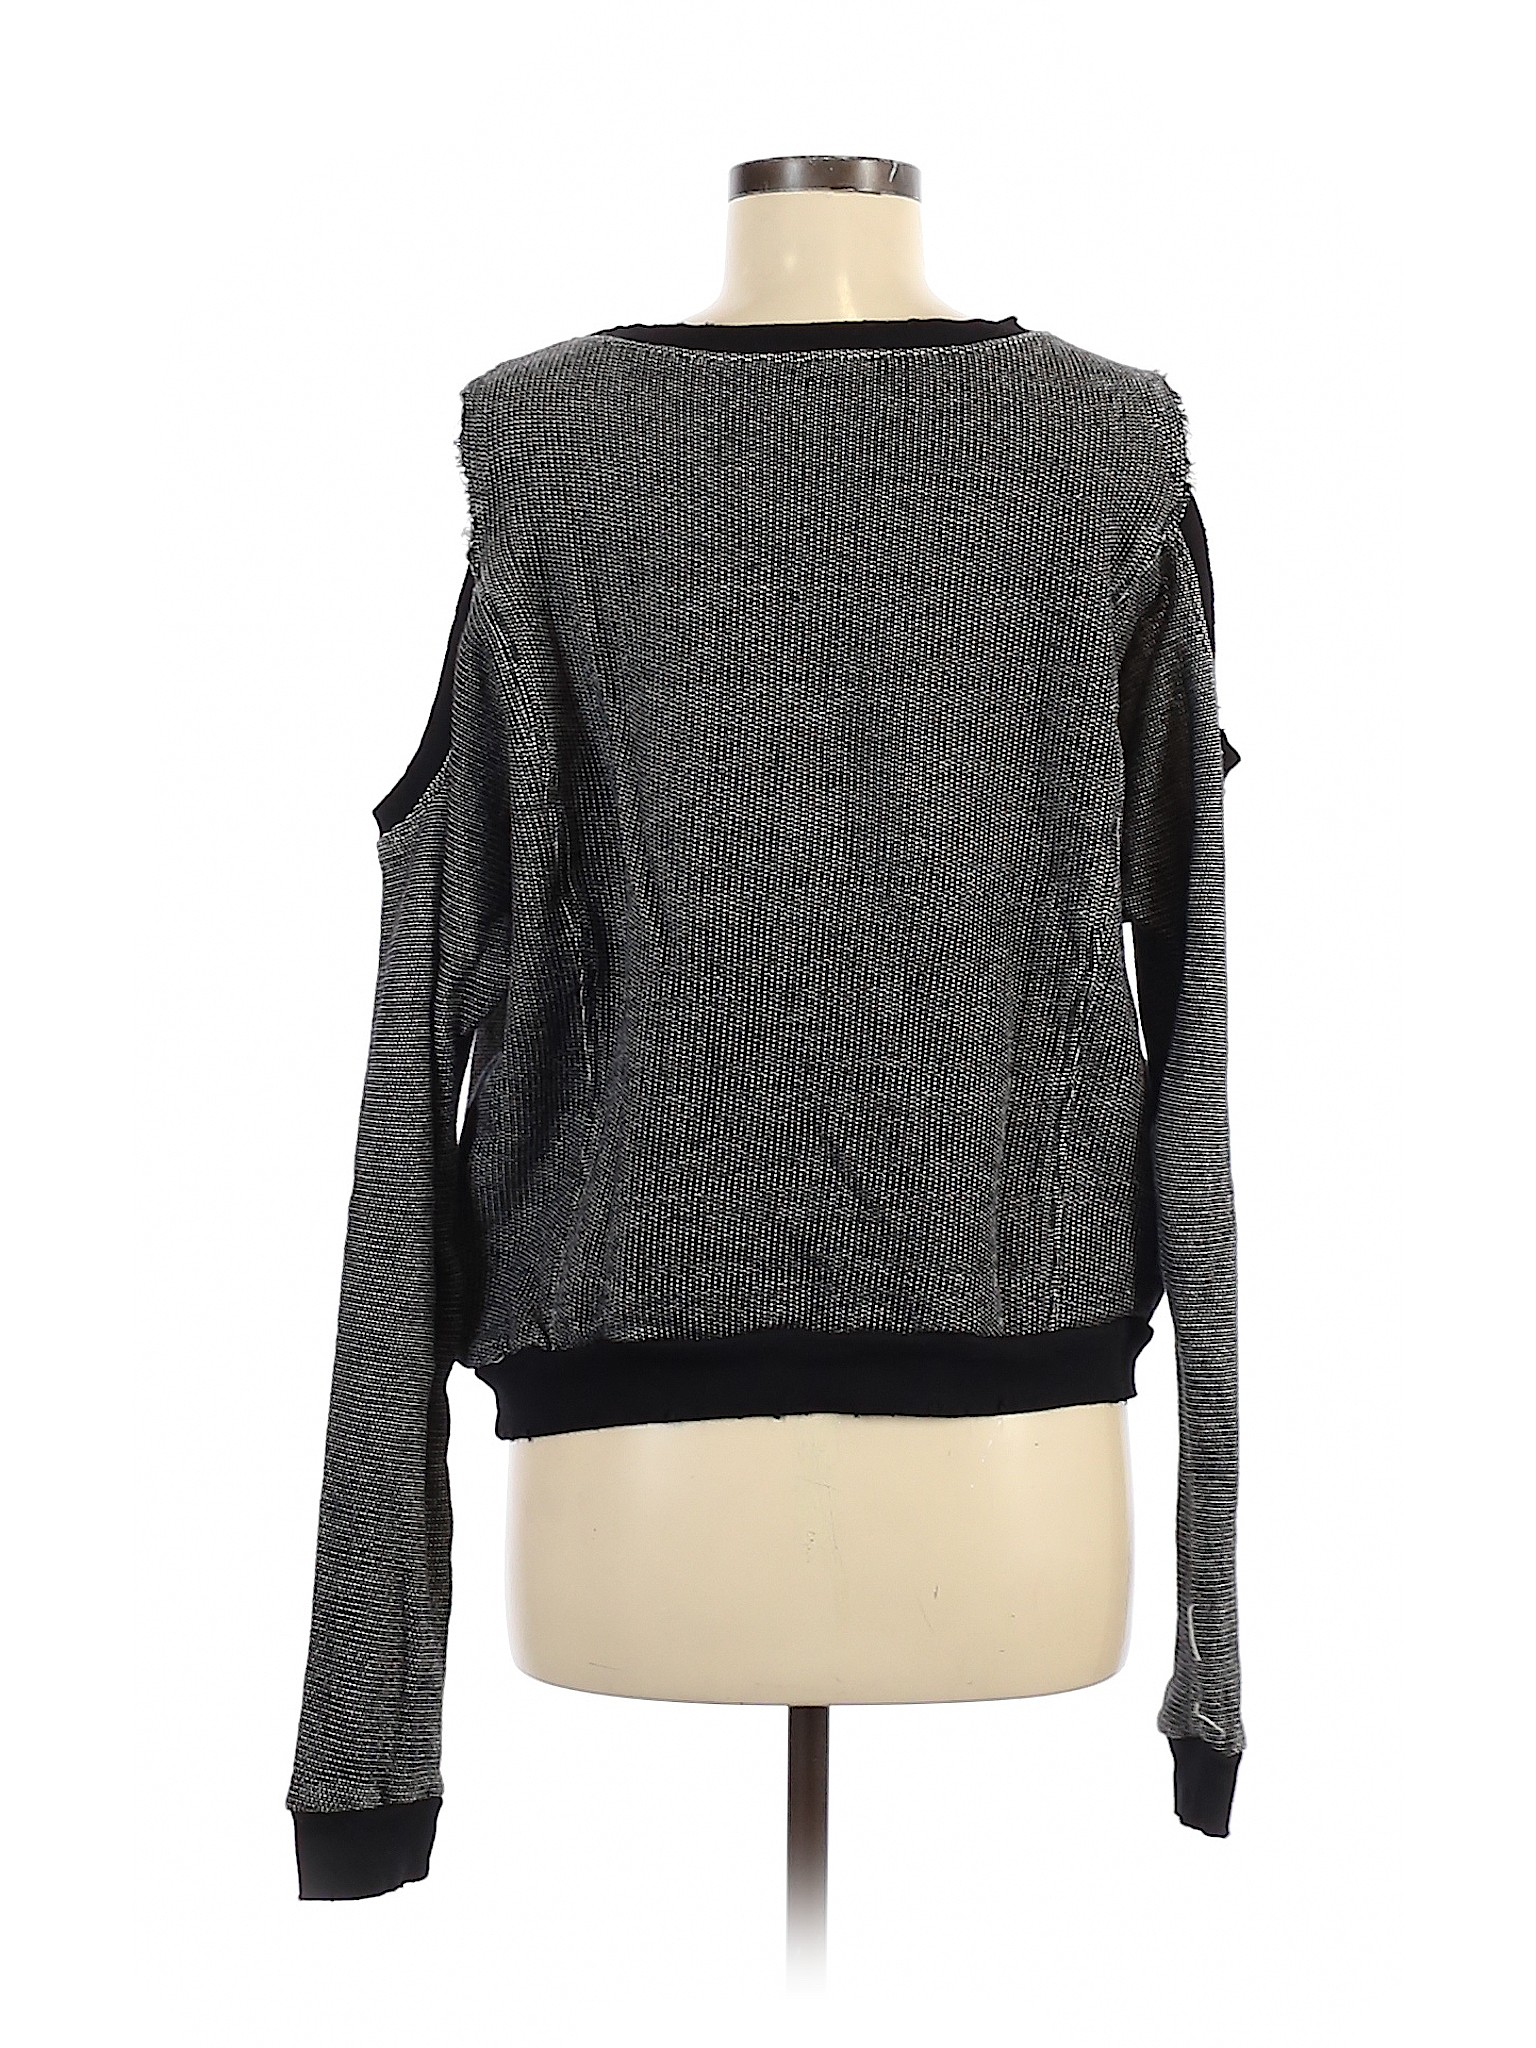 William B Women Gray Pullover Sweater M | eBay